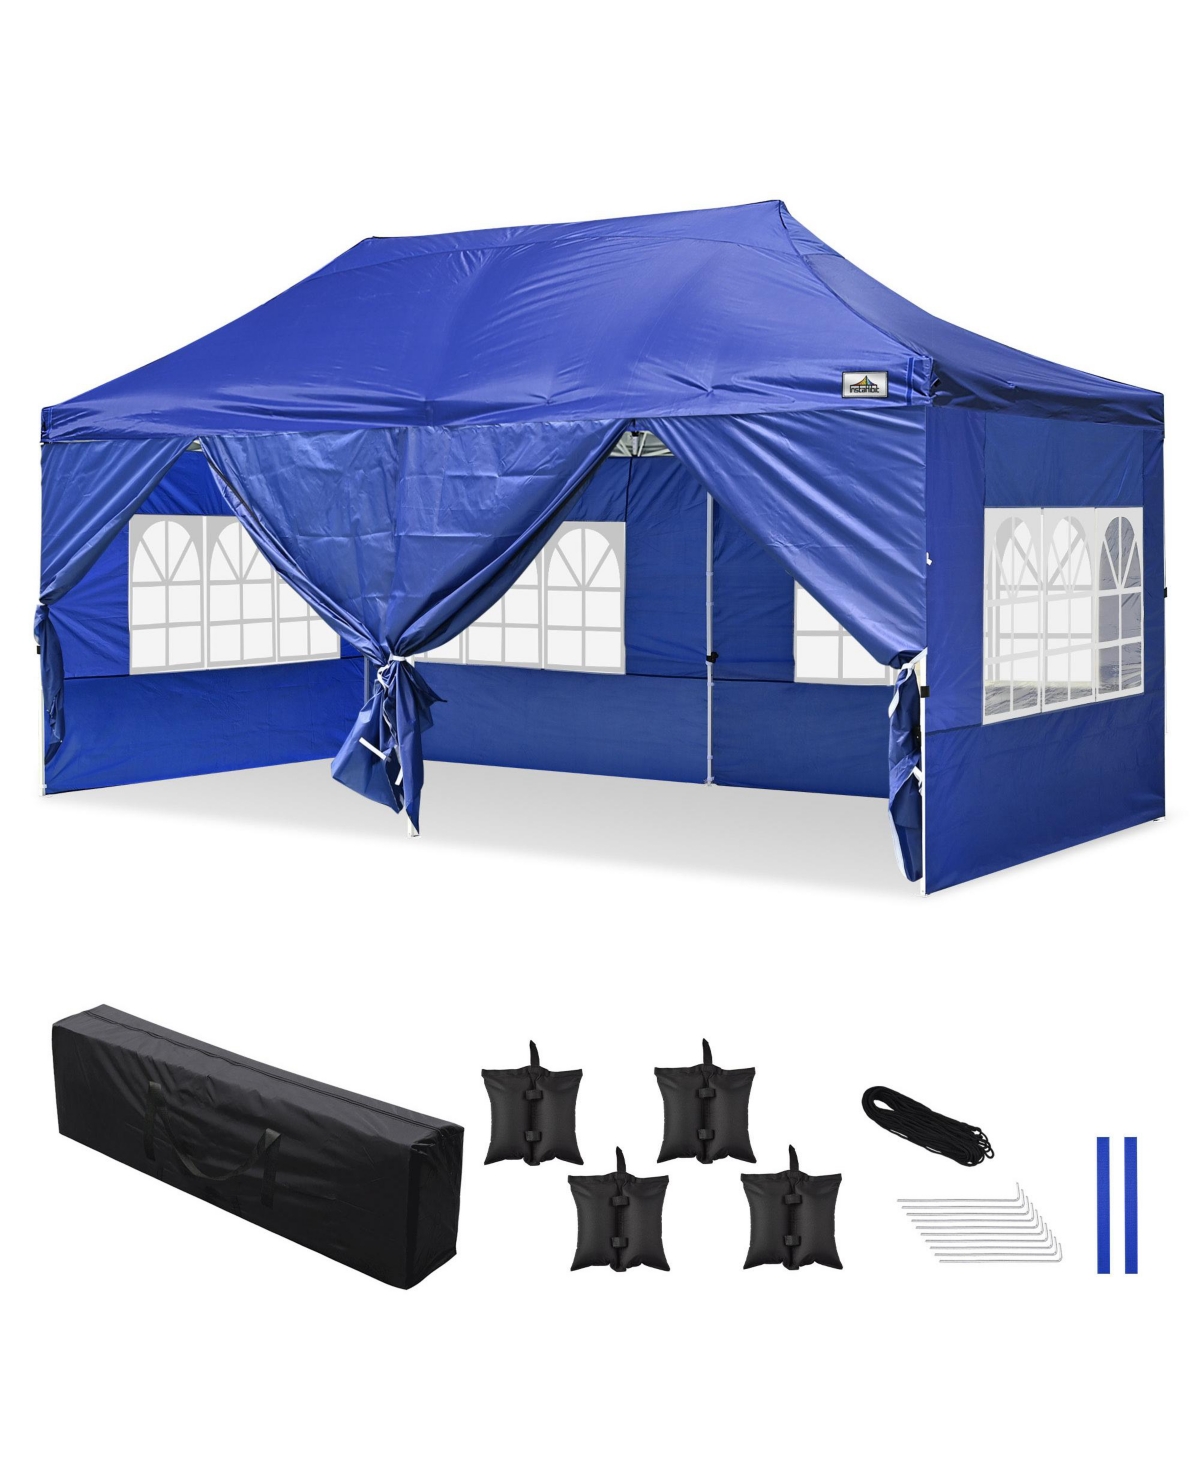 10x20FT Canopy Wedding Party Tent Pop Up Folding Gazebo Outdoor w/ 4 Sidewalls & Bag Navy - Blue